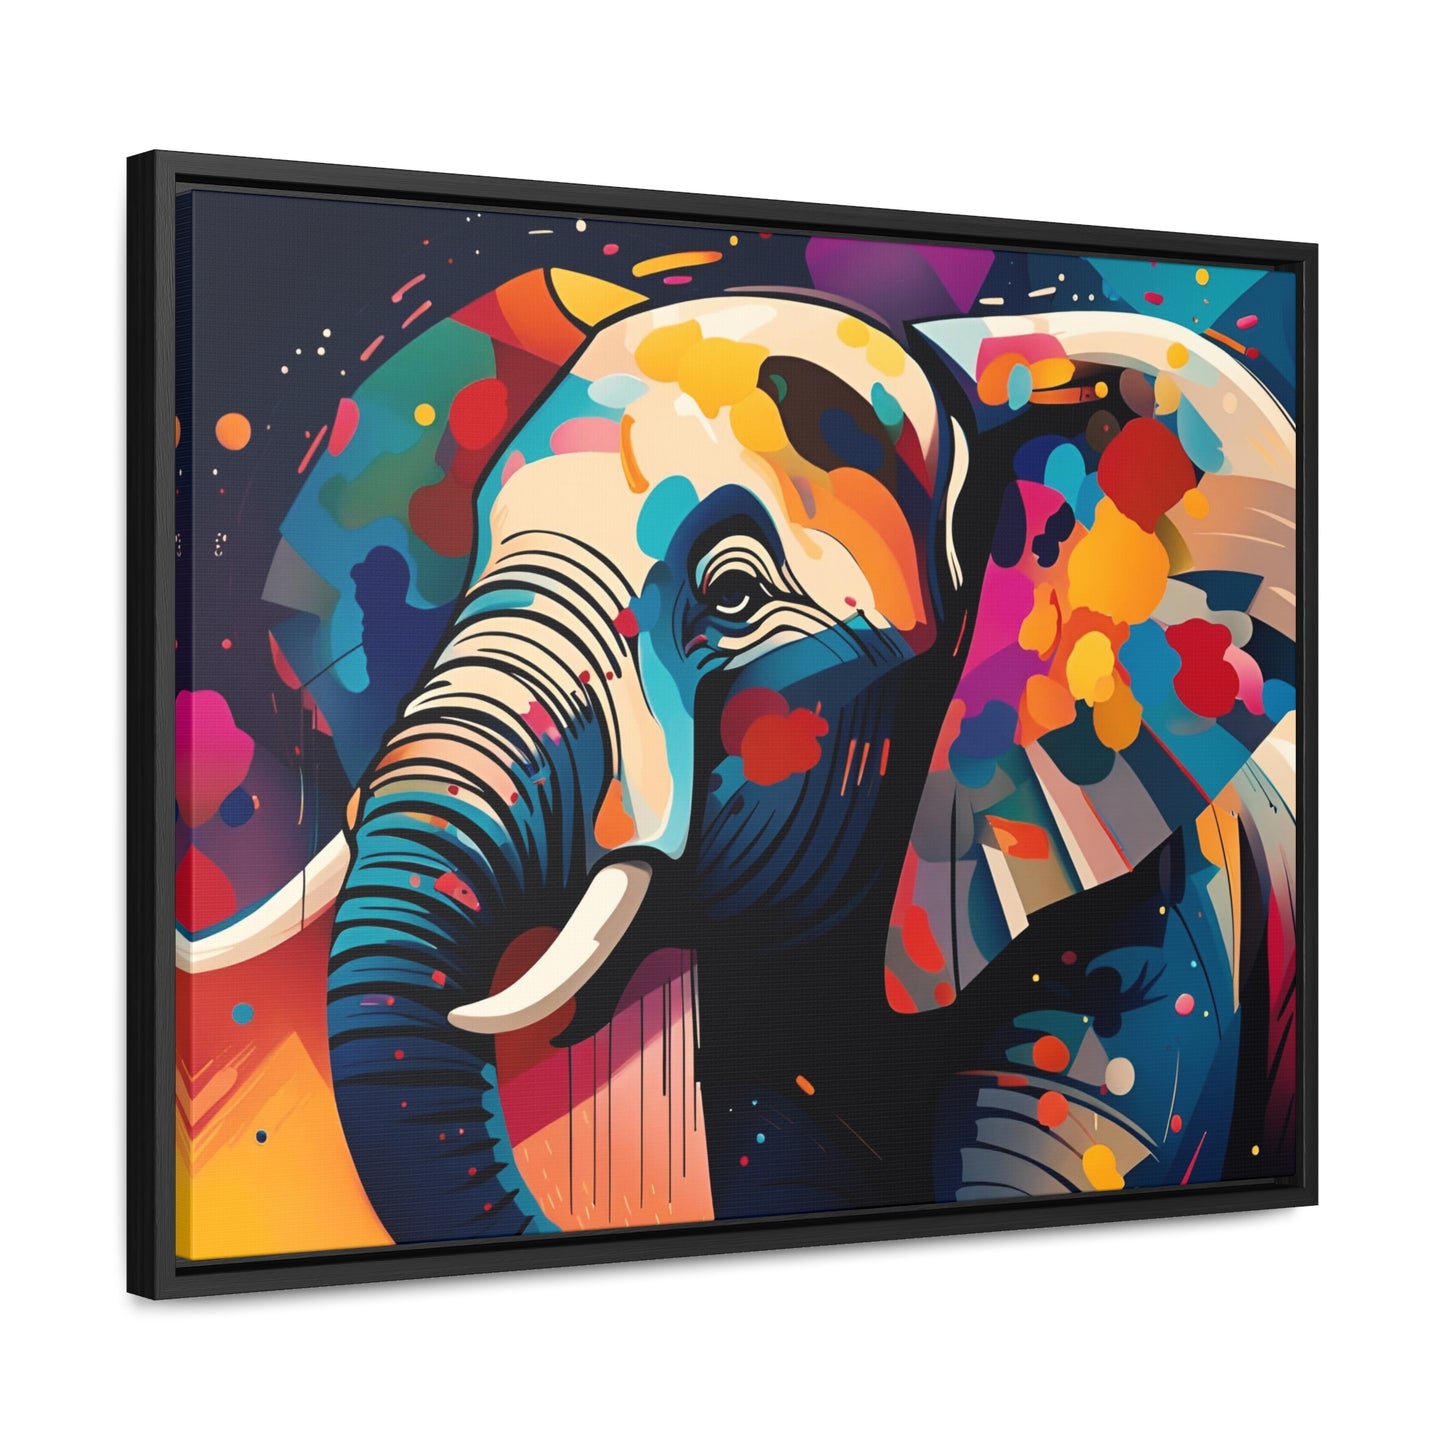 Elephant themed Wall Art - Multicolor Elephant Head Print on Canvas in a Floating Frame